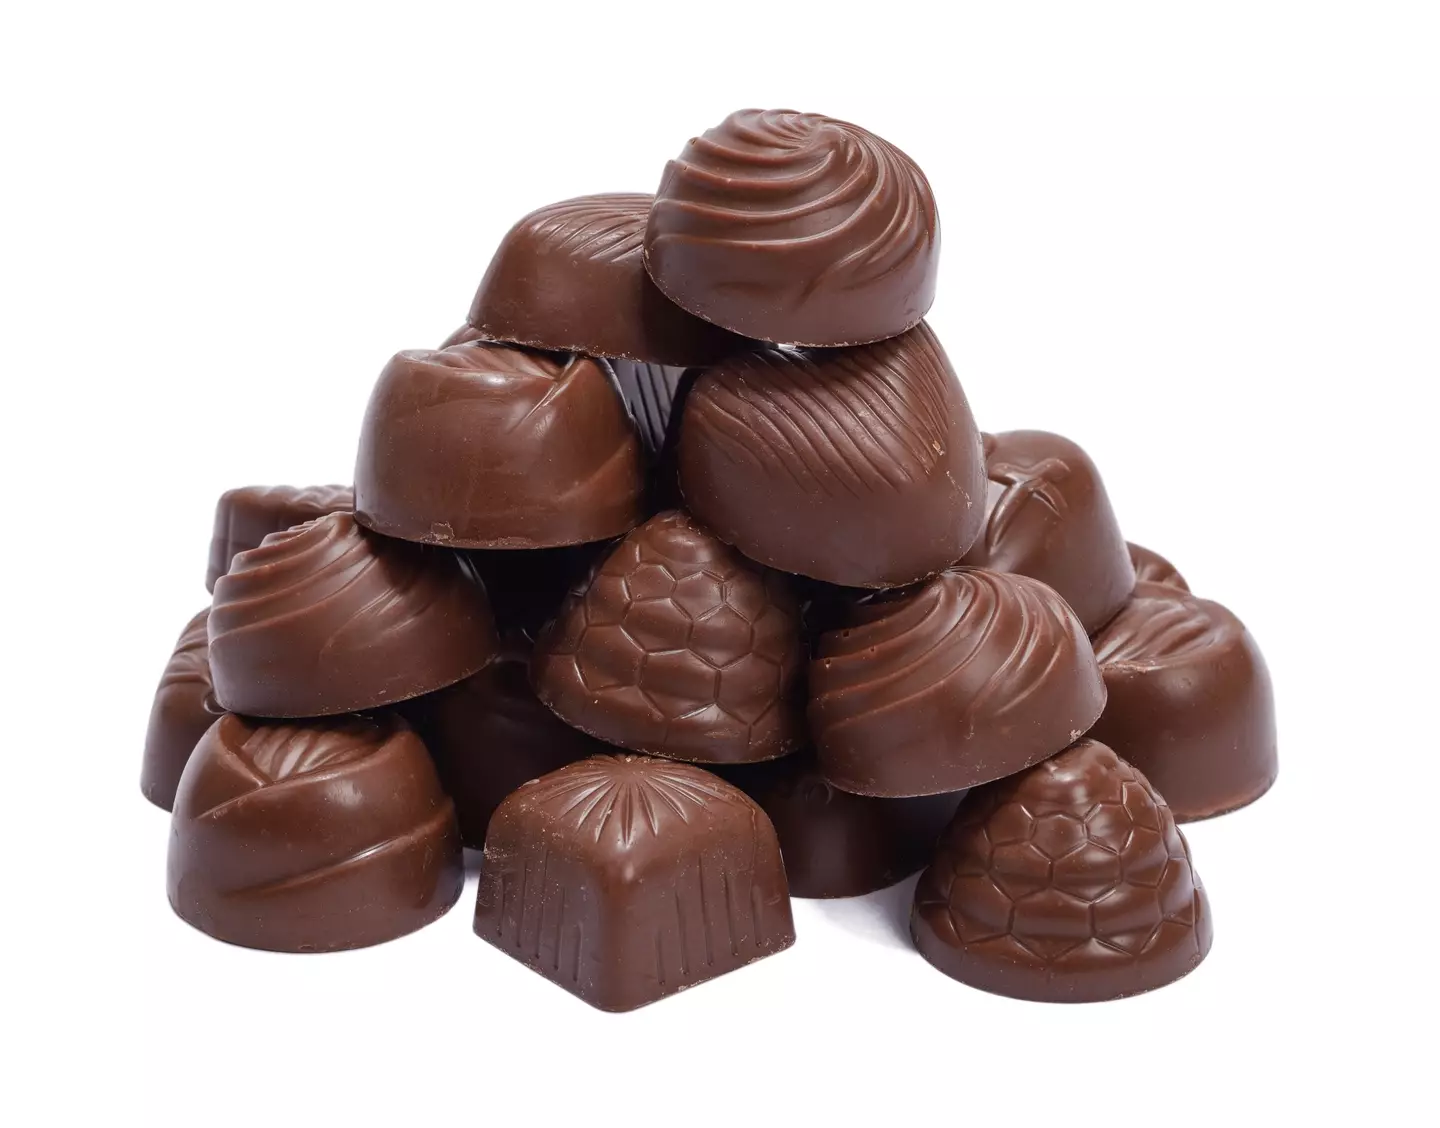 Police found fake versions of popular chocolates.